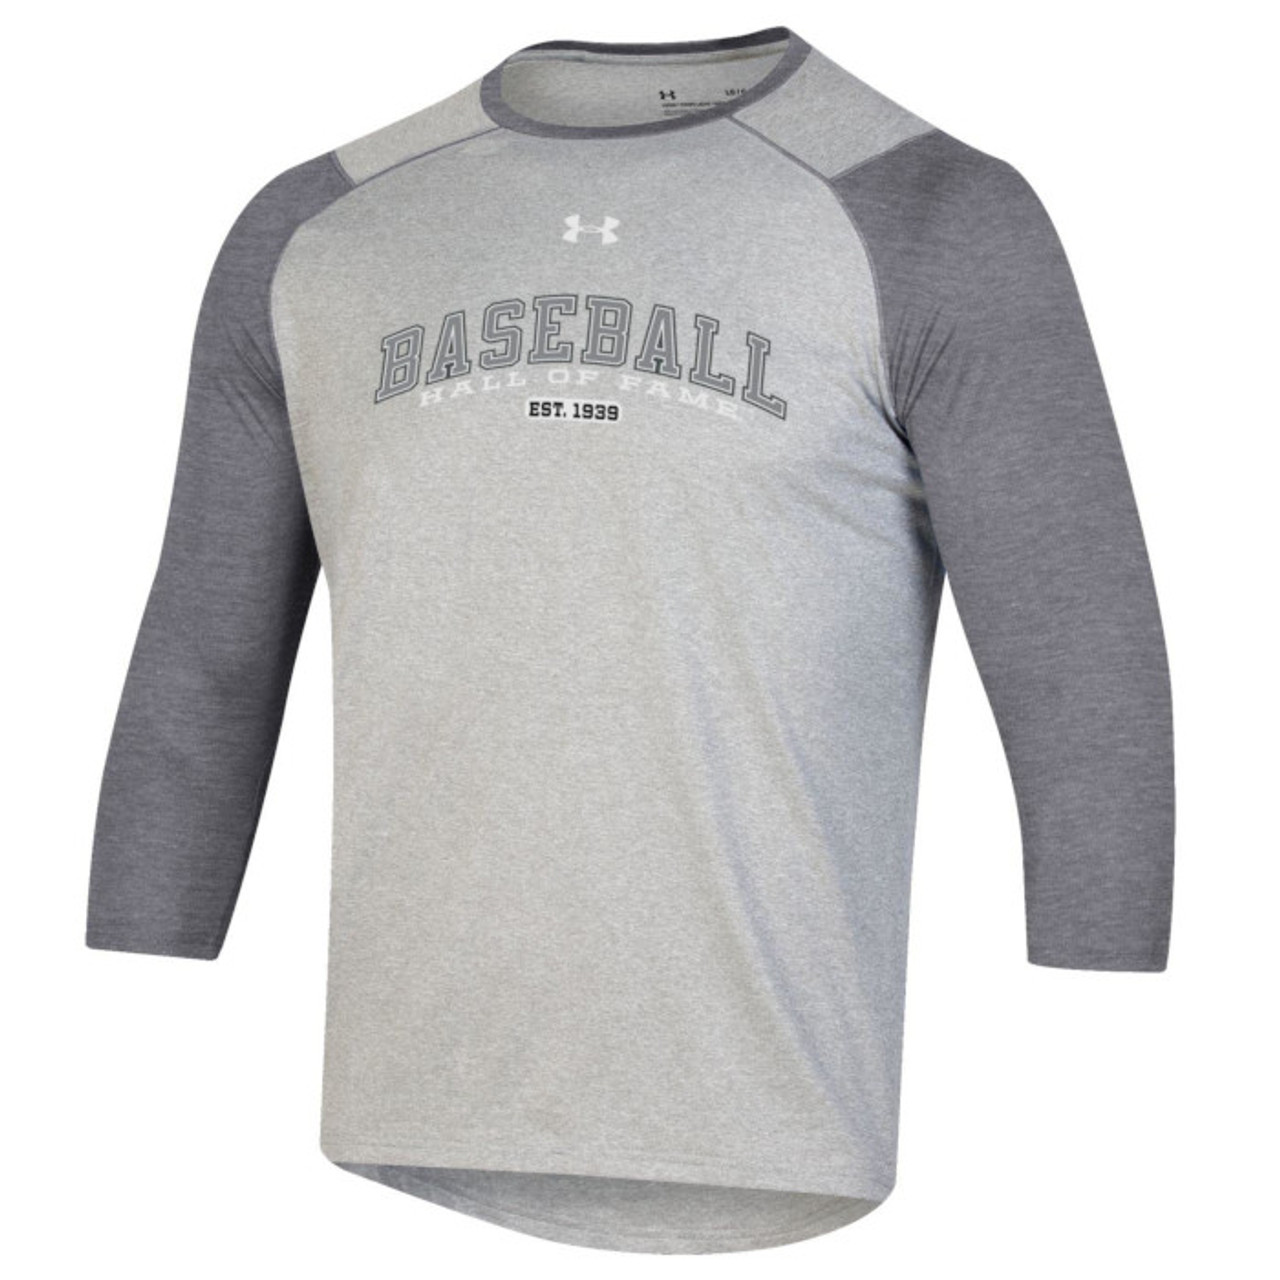 Under Armour, Shirts, Under Armour Chicago Cubs World Series Sweatshirt